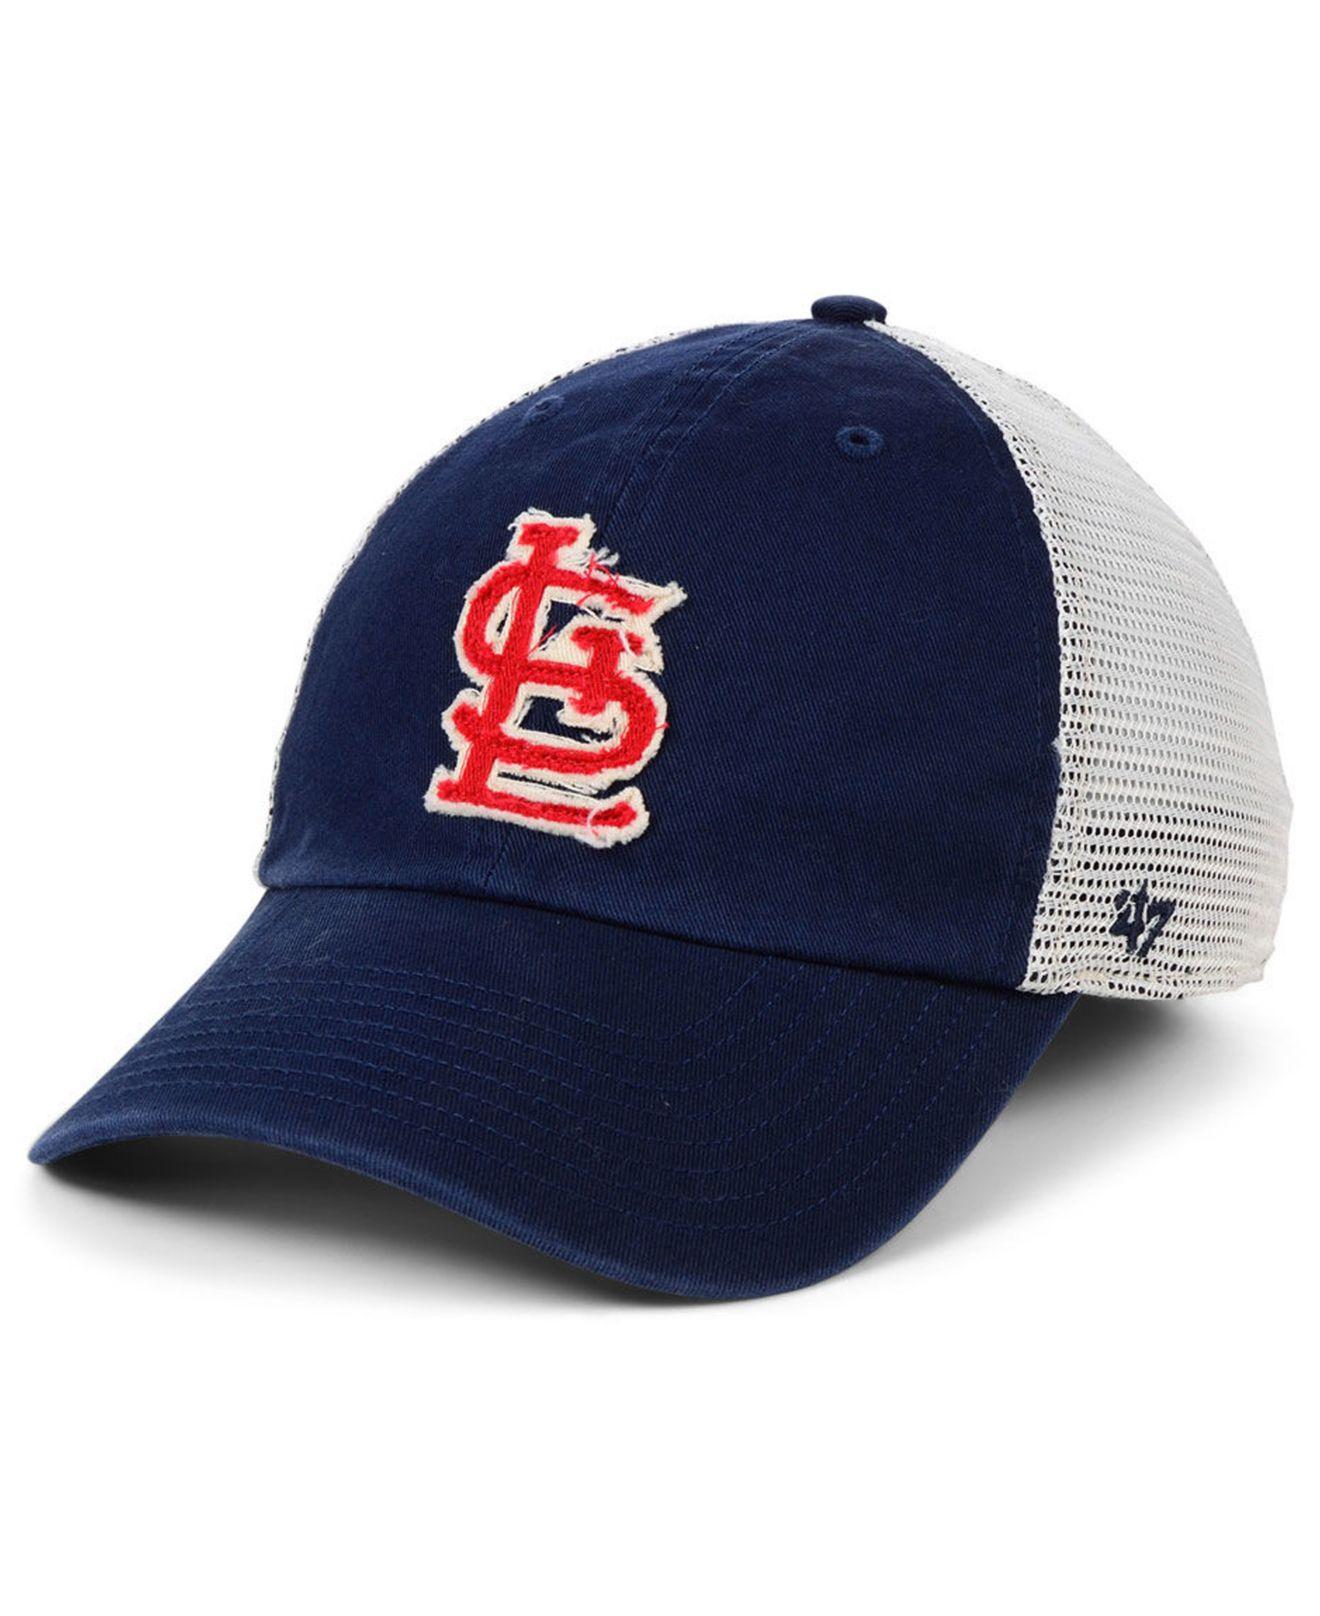 Logo Brands St. Louis Cardinals 20-fl oz Stainless Steel Blue Cup